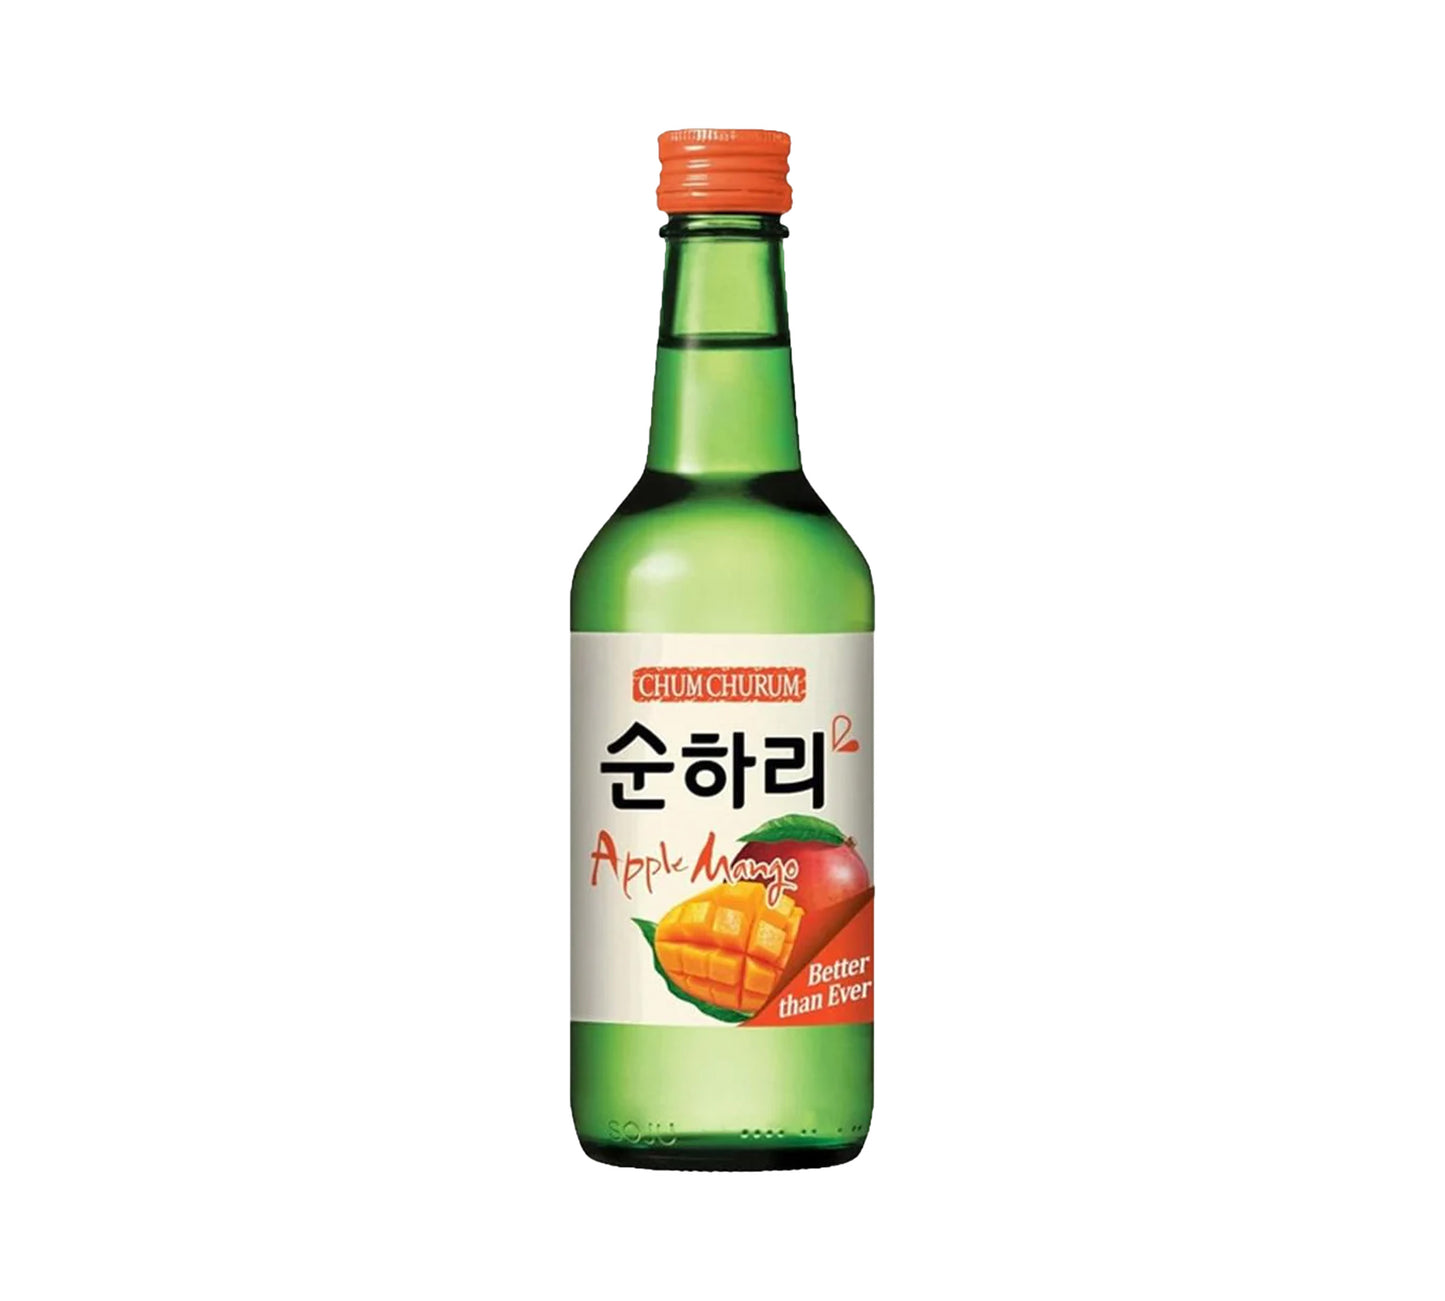 Lotte Chum Churum Soju Apfel-Mango-Geschmack 12% (360 ml)